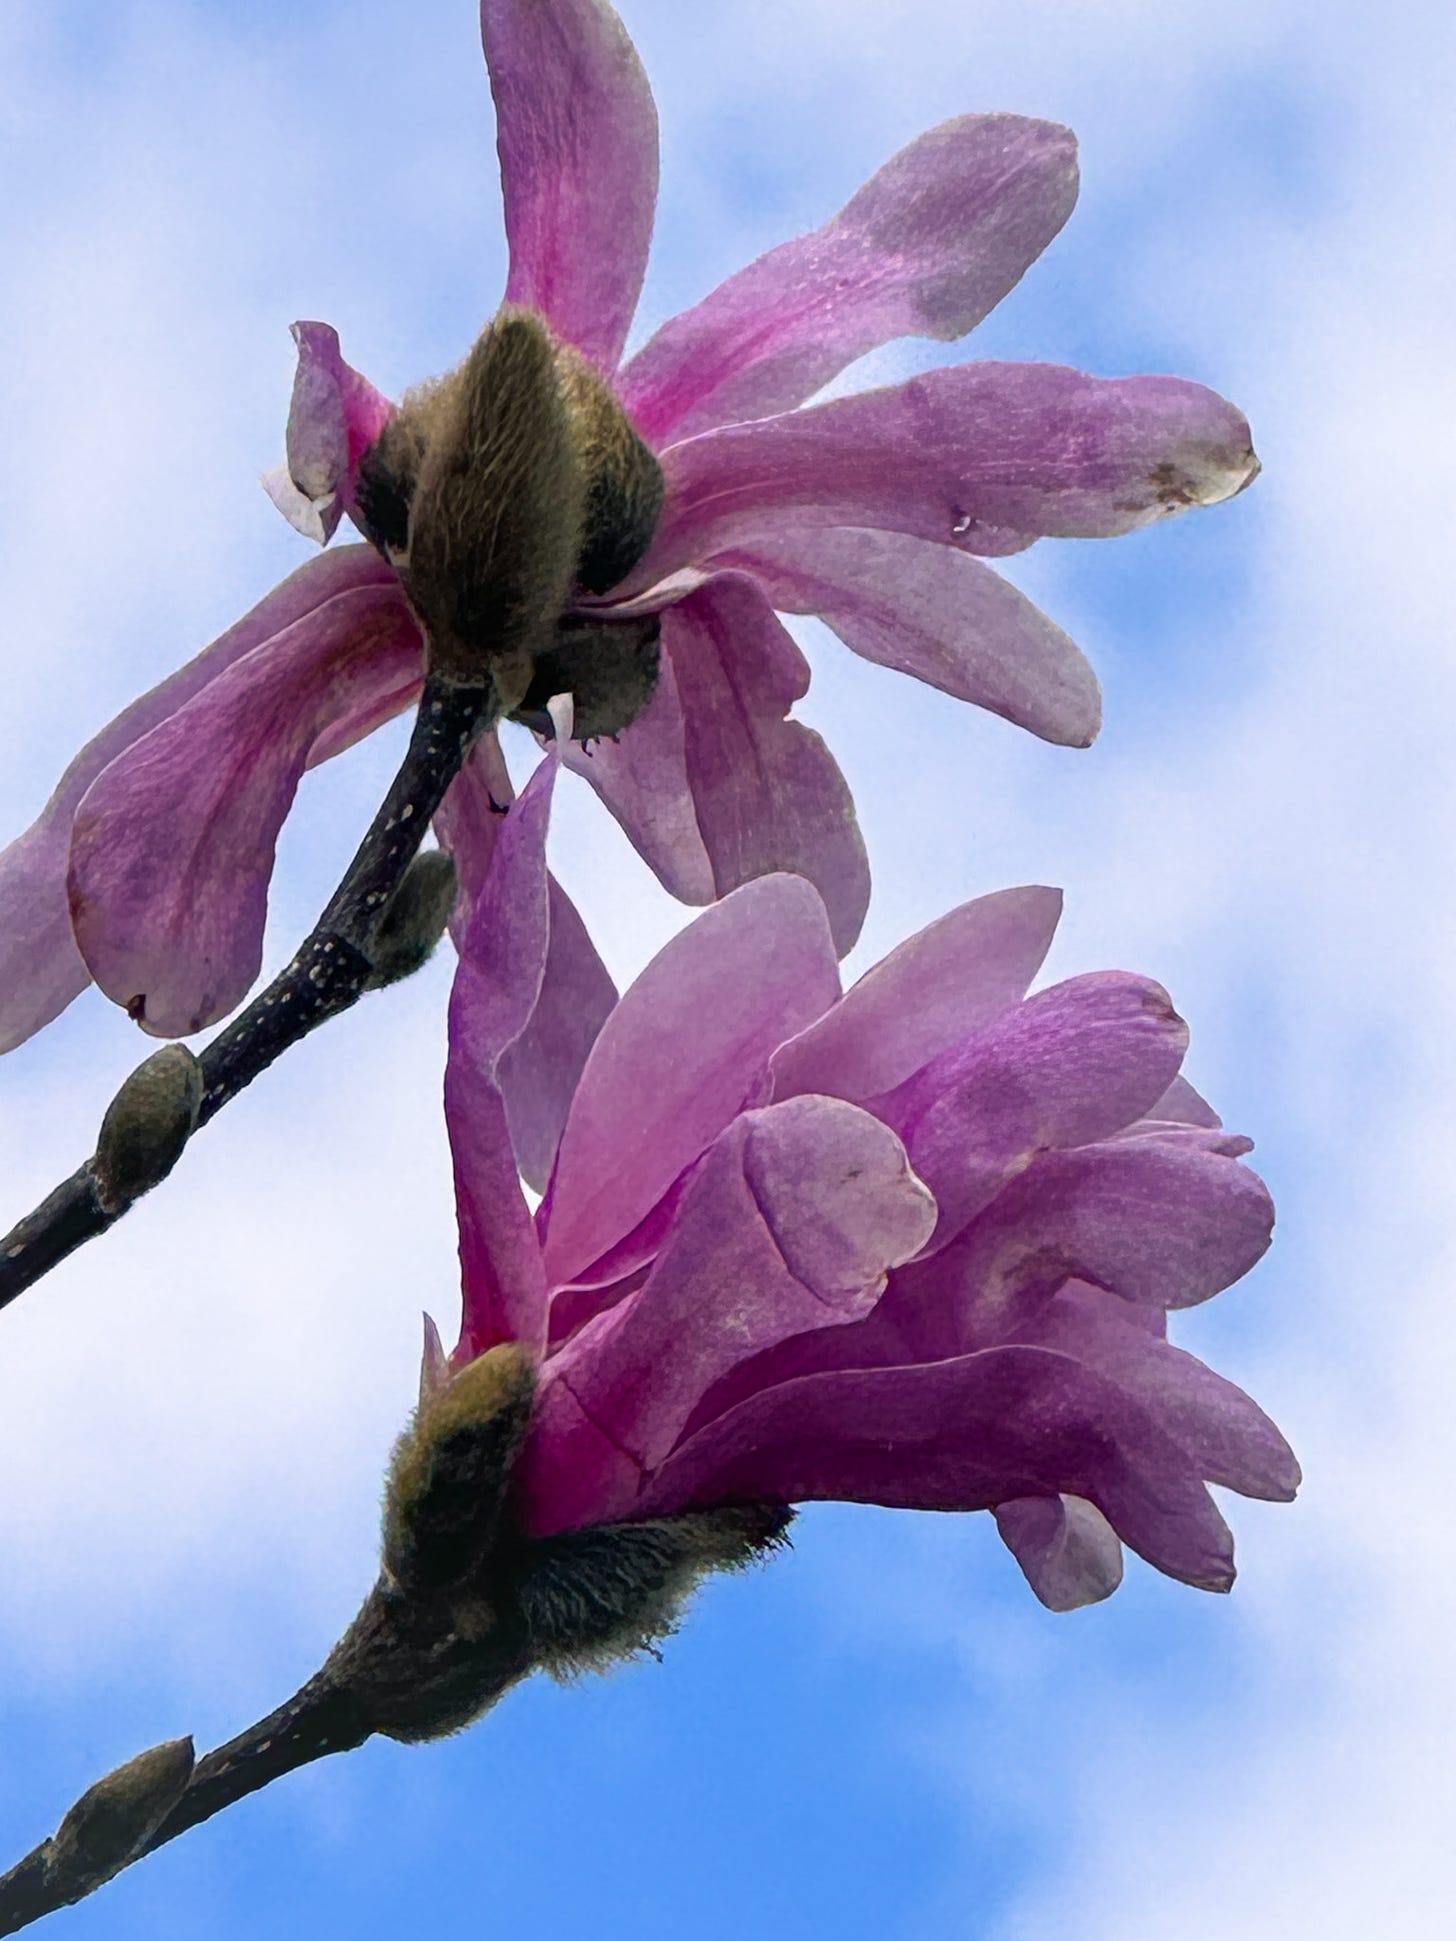 pink tulip magnolias against a blue sky 